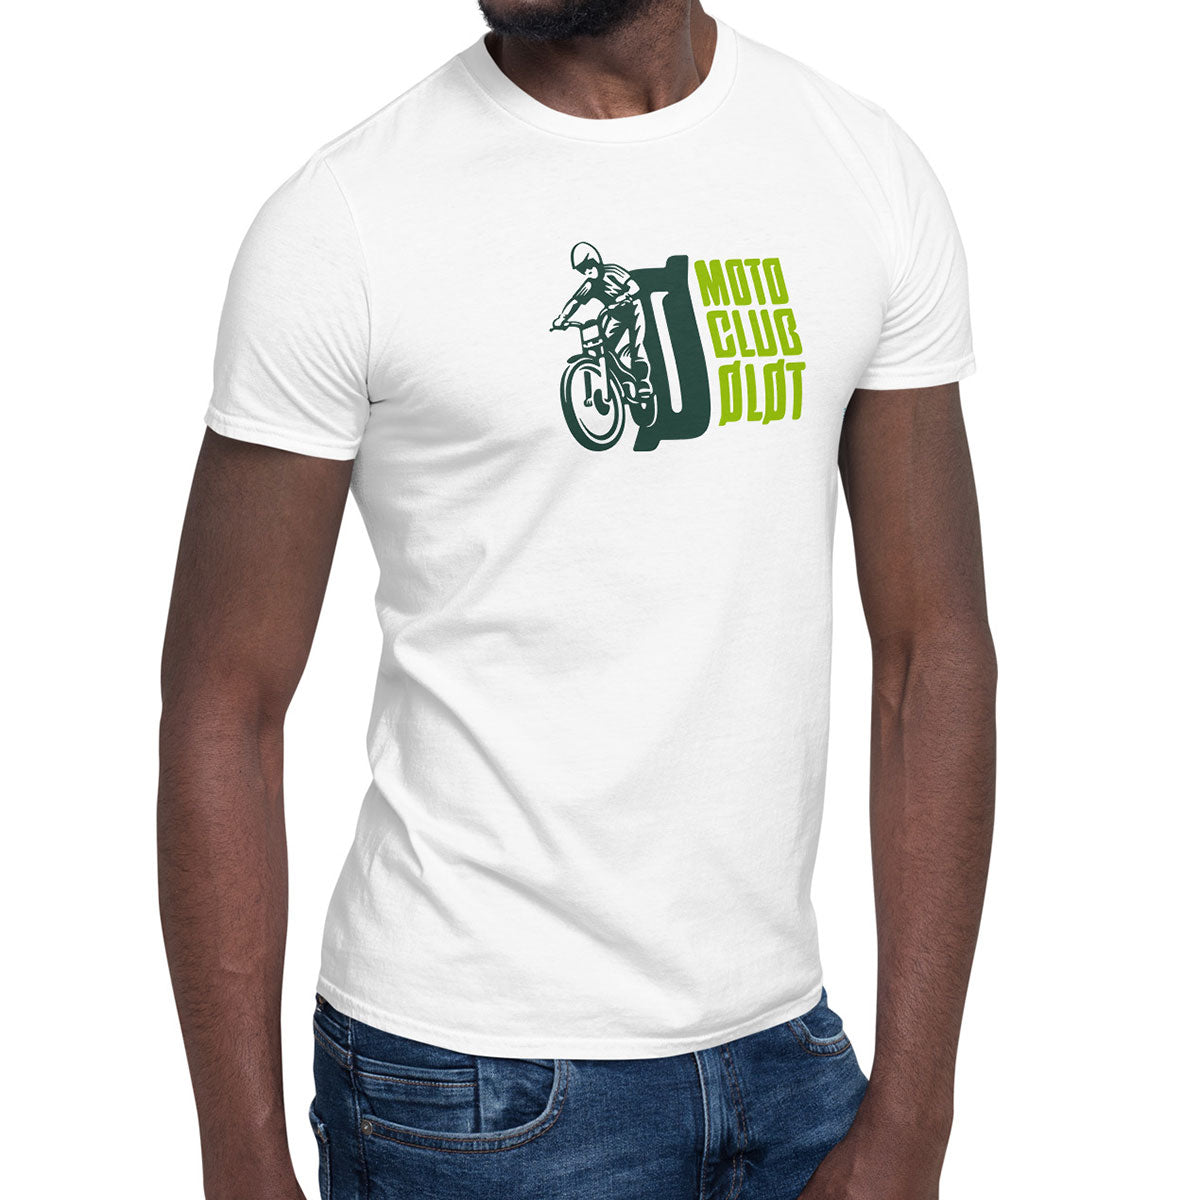 MOTO CLUB OLOT · Camiseta m/corta·Hombre/Unisex · Basic·Blanco-125a1